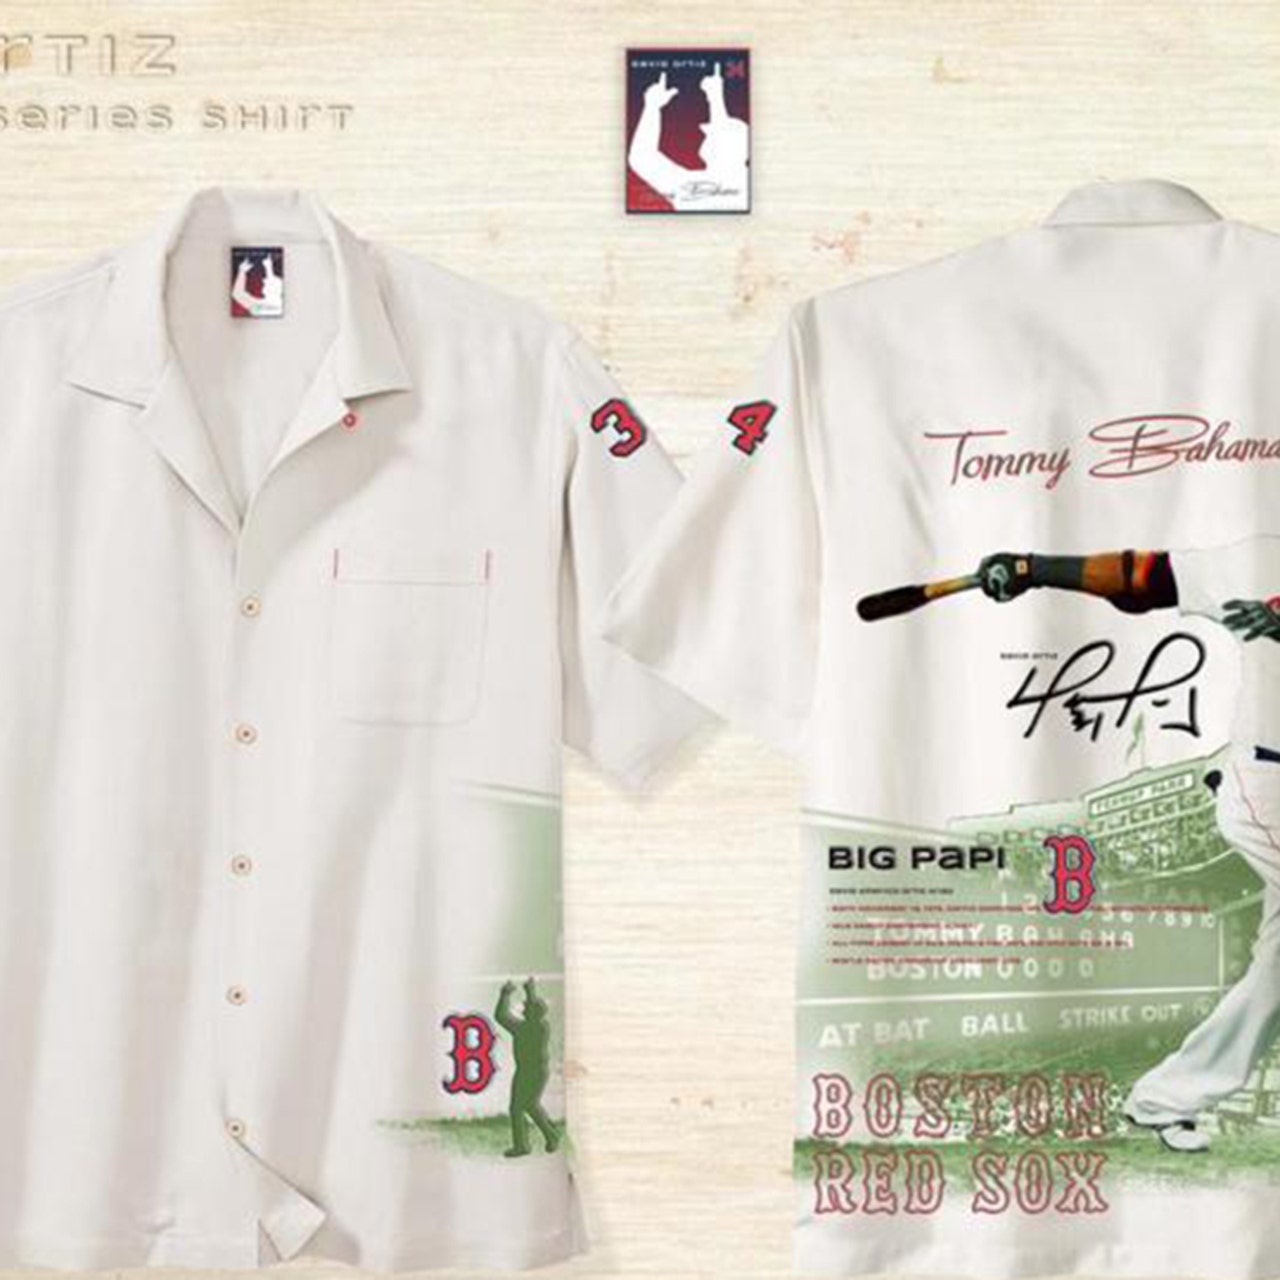 Tommy Bahama MLB® Houston Astros Fan Gear